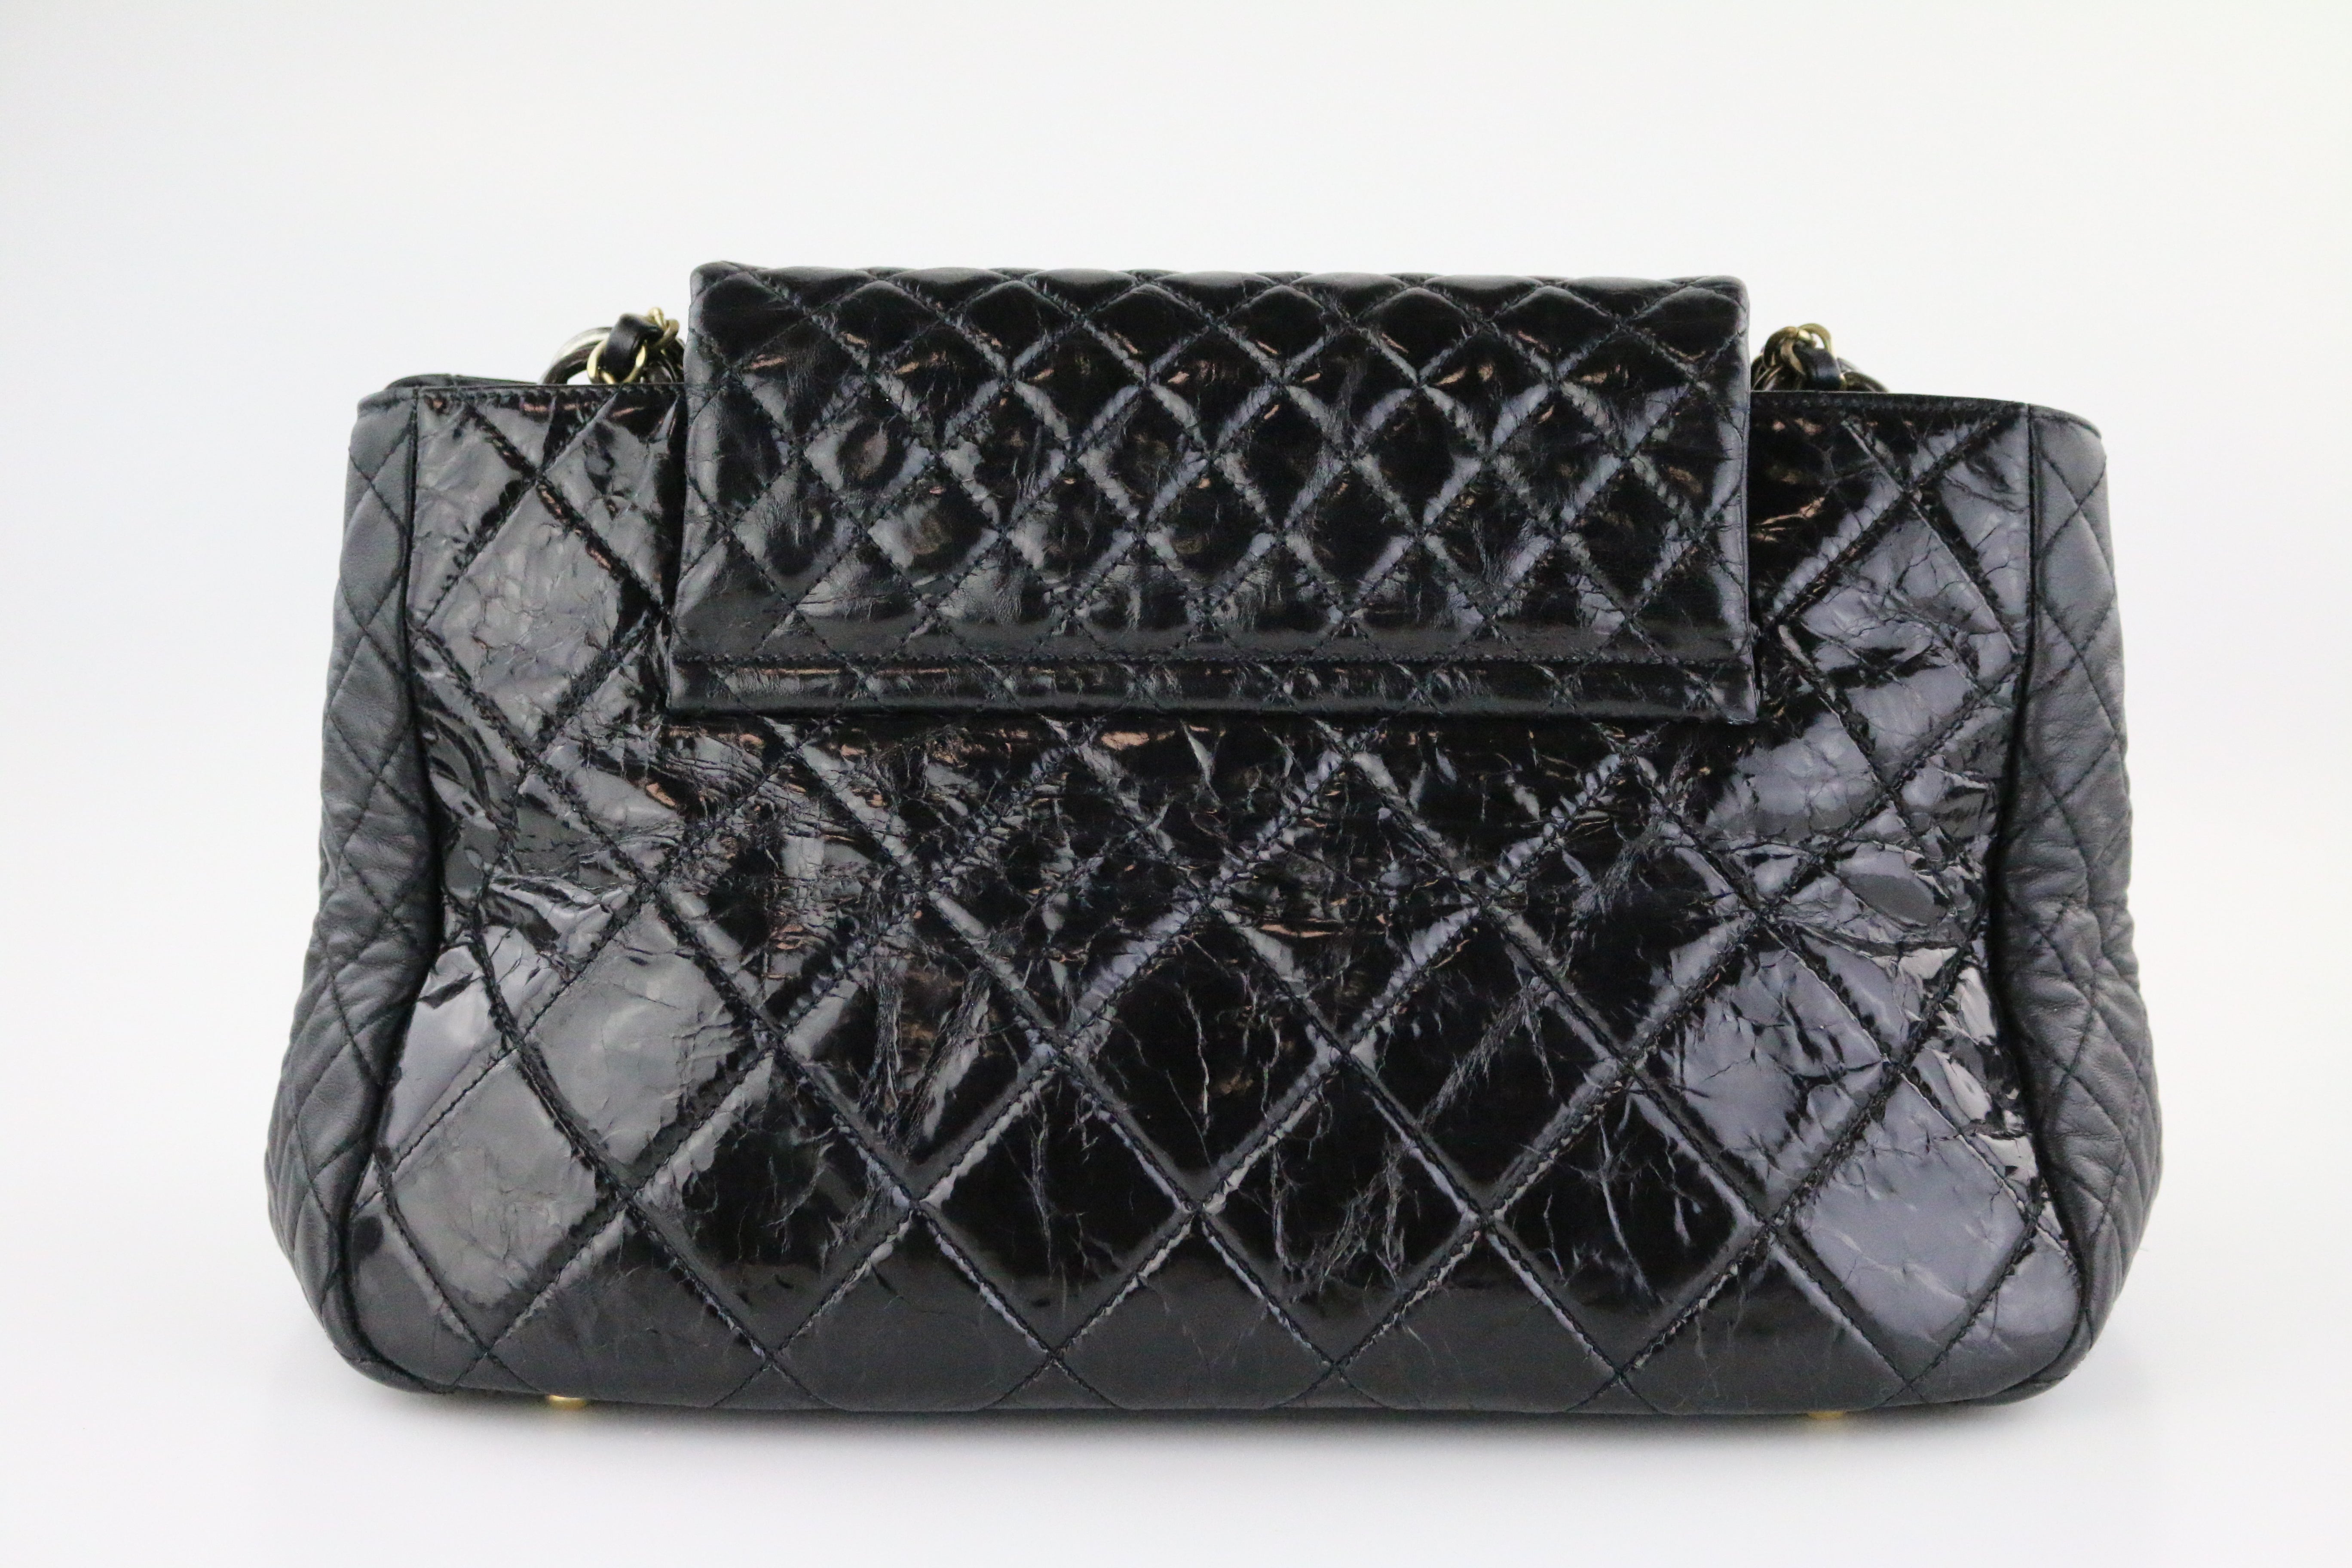 Chanel Reissue 2.55 Mademoiselle Lock Black Elephant Veins Leather